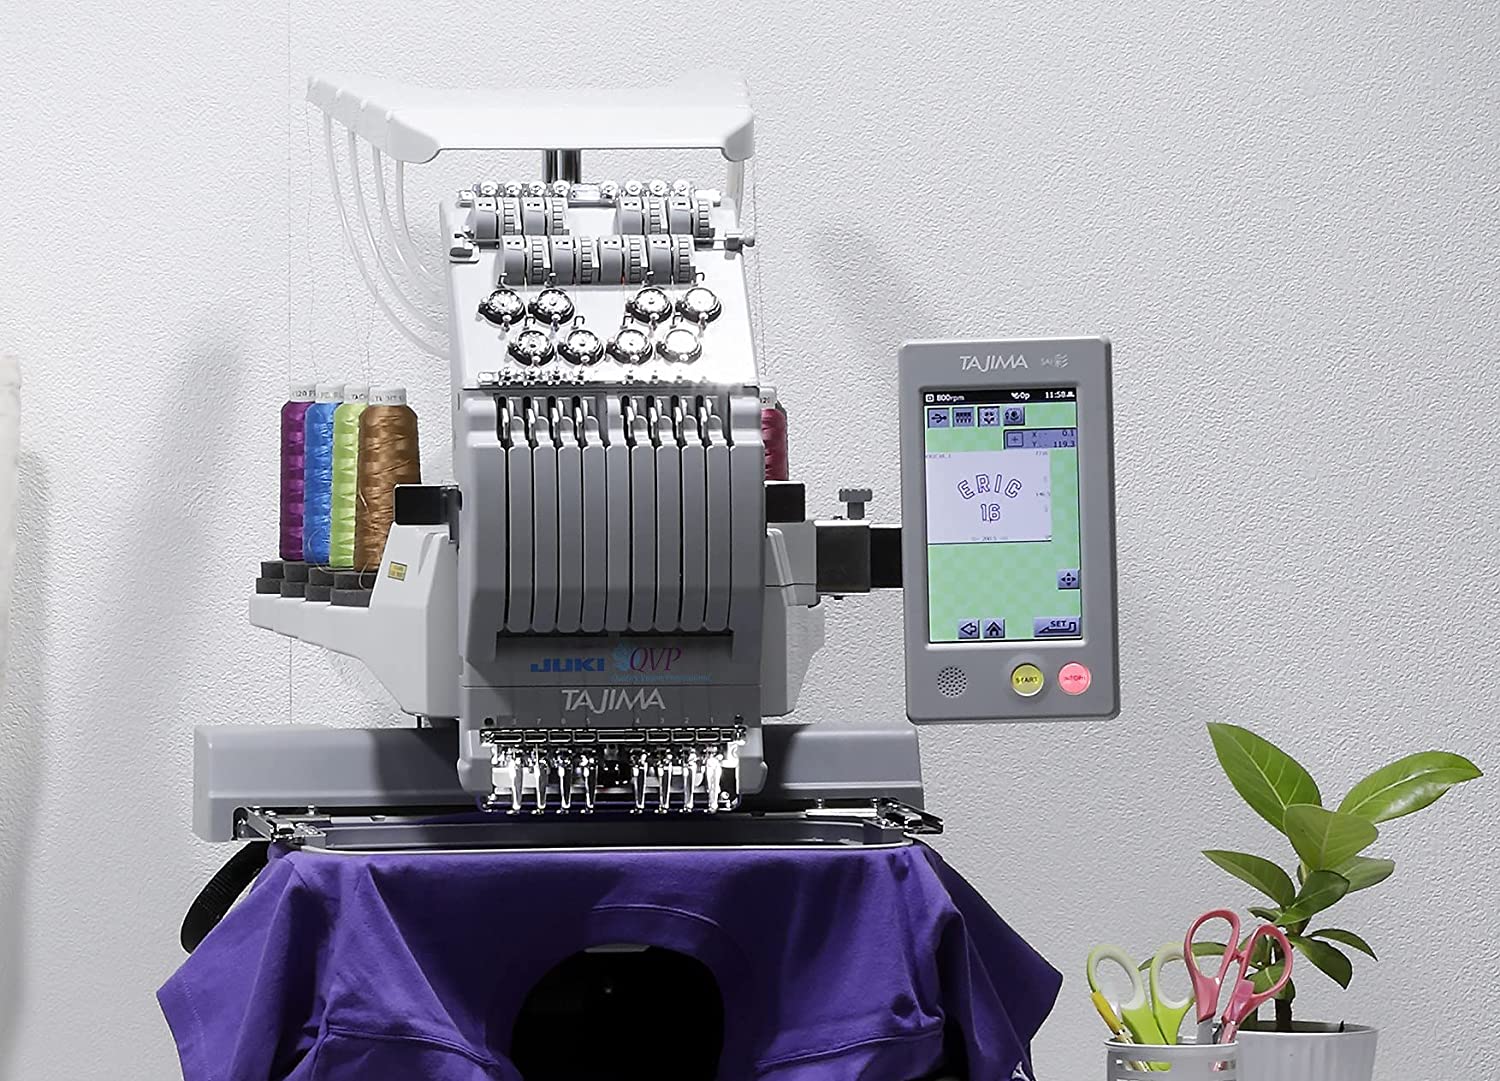 JUKI Tajima SAI 8 Needle Embroidery Machine view from front of the machine